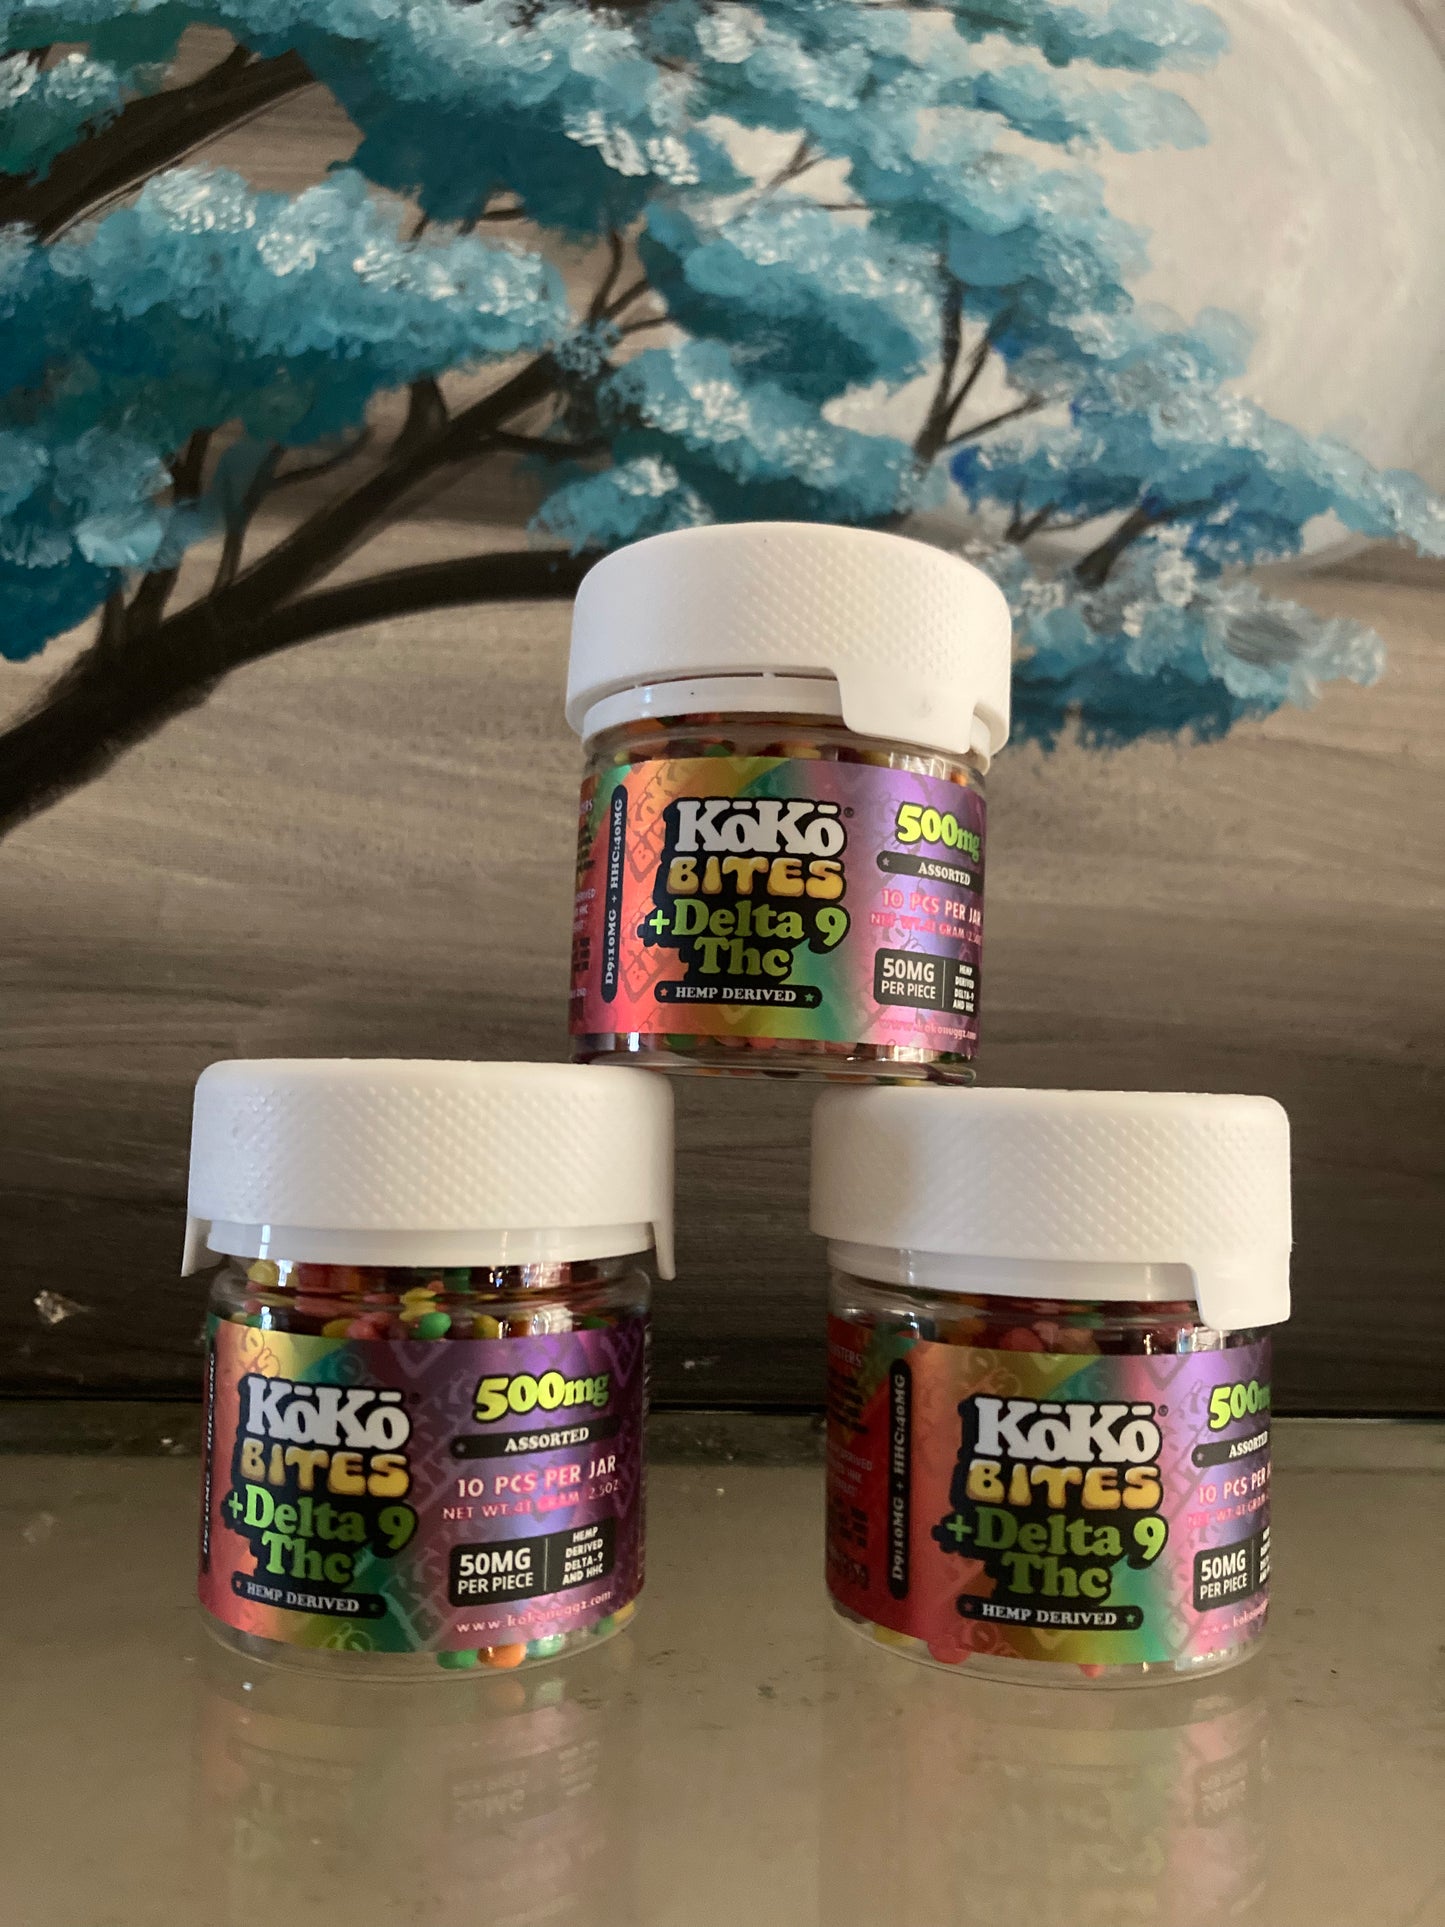 Koko Bites+Delta 9 THC